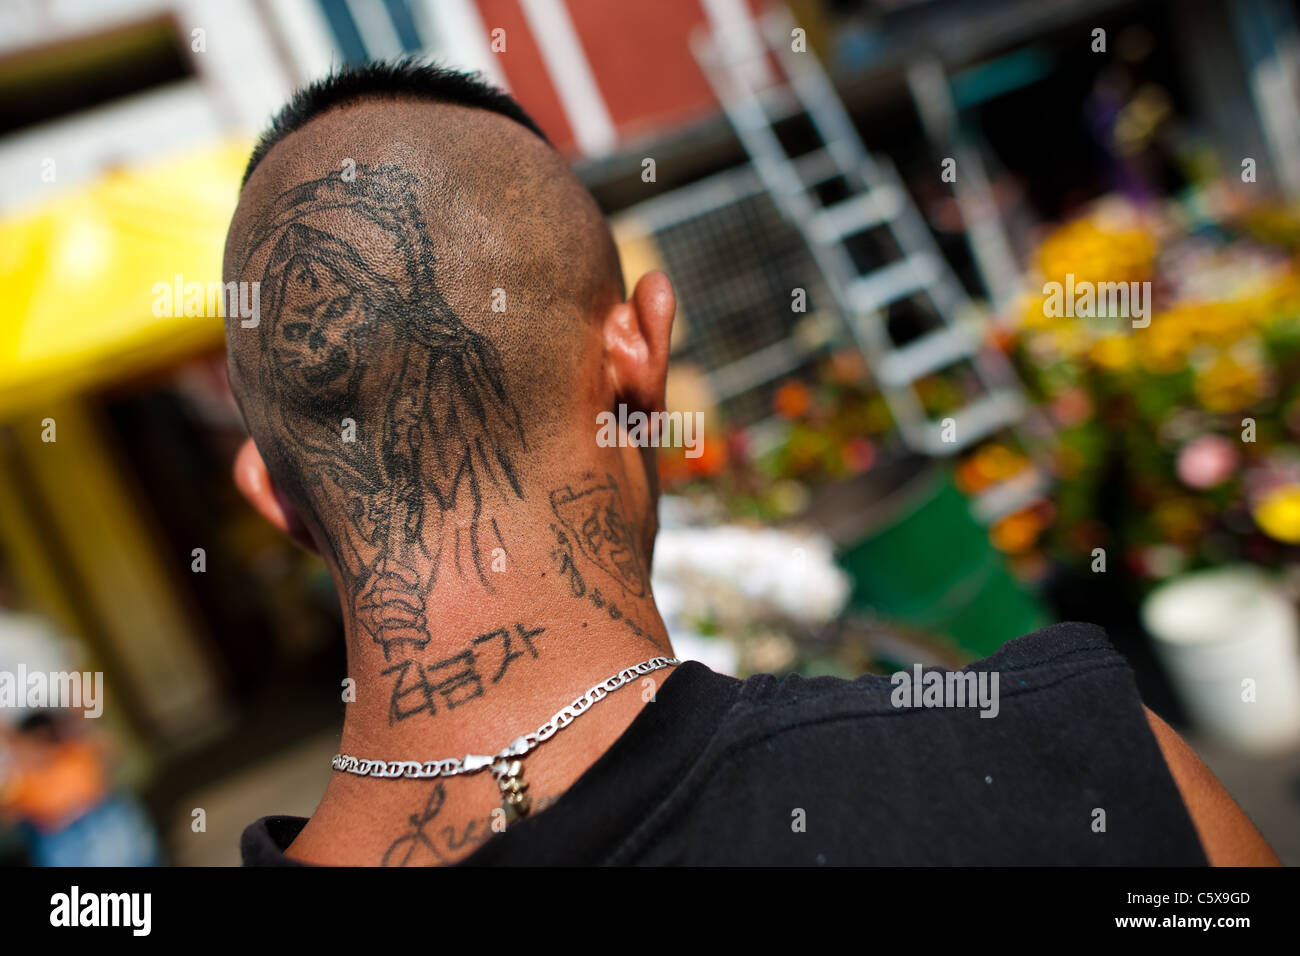 AP Photos In Mexico prejudice fades around tattoos  Taiwan News   20190524 014730